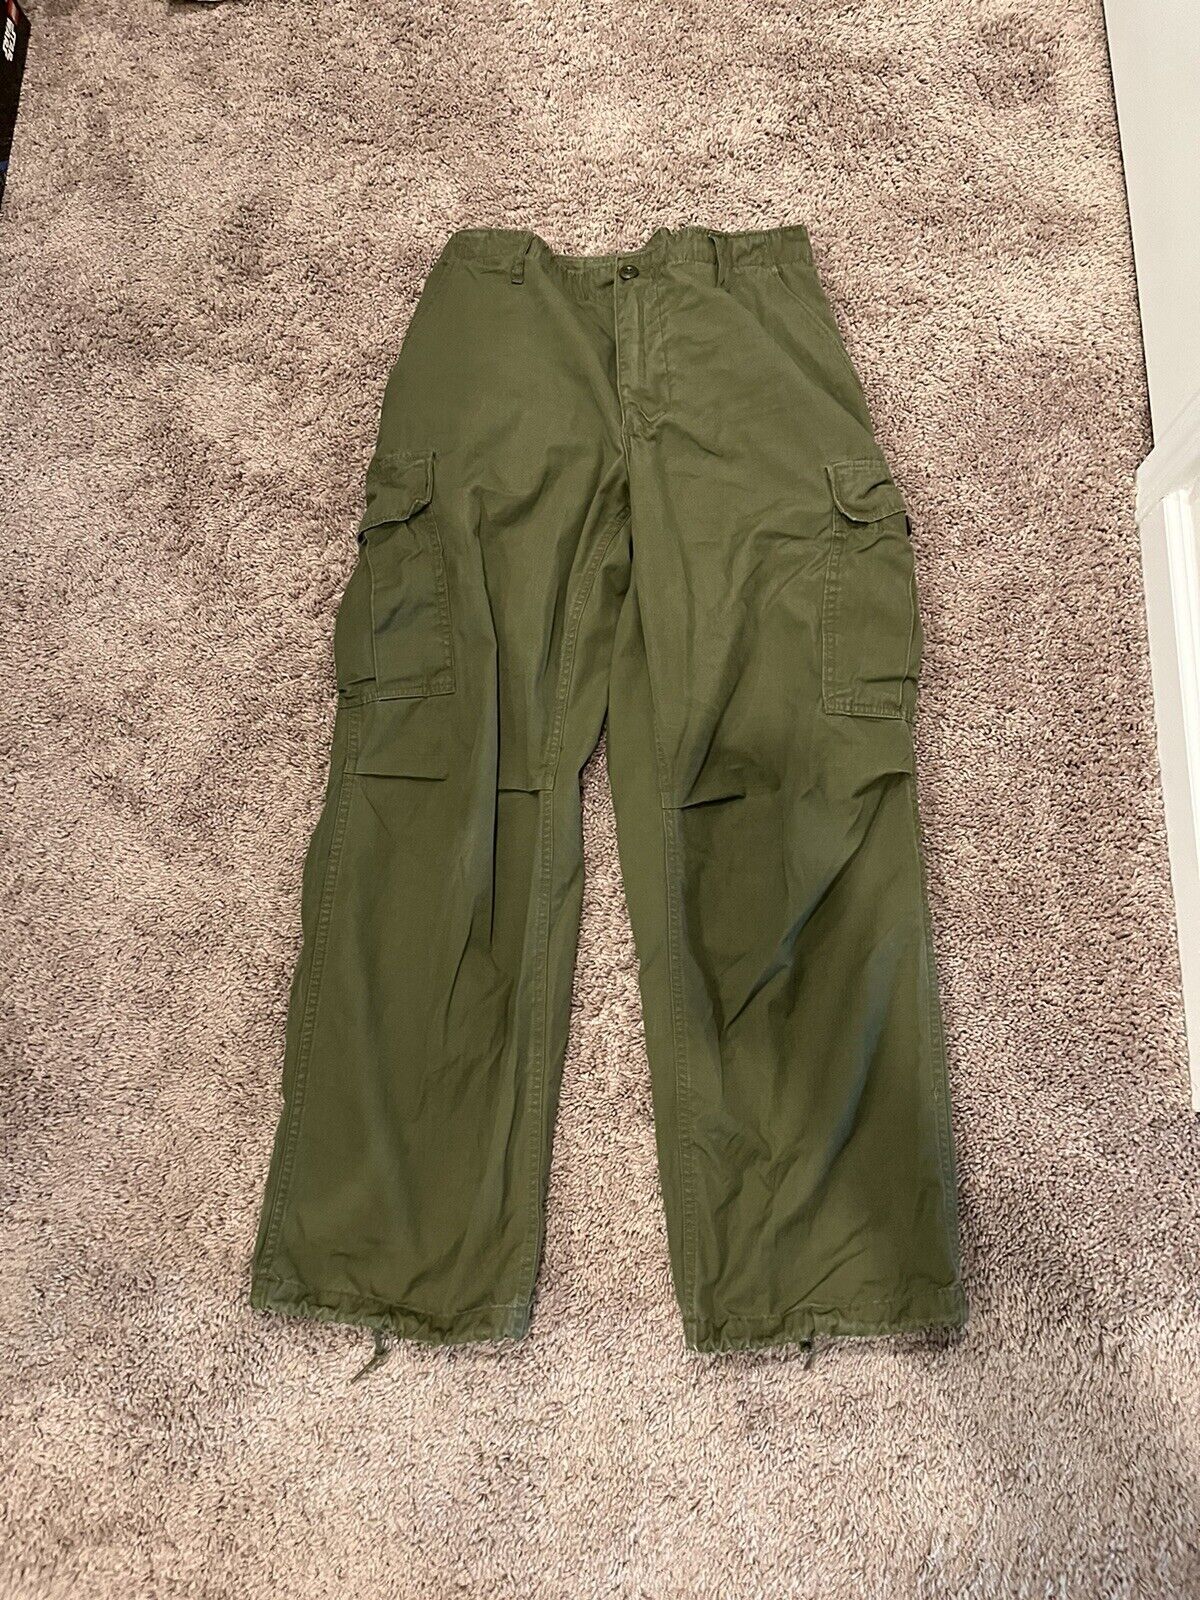 1960s Vietnam War US Army Military OG-107 Trousers Poplin Pants Medium Regular